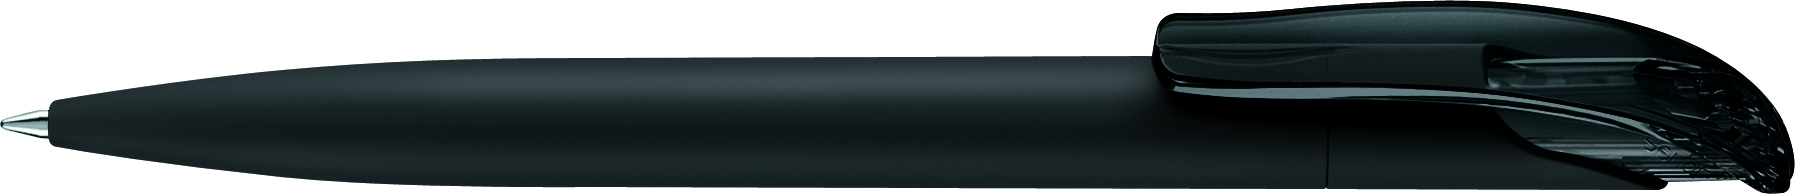  2737 ШР Challenger Soft Touch clip clear черный black, черный, пластик